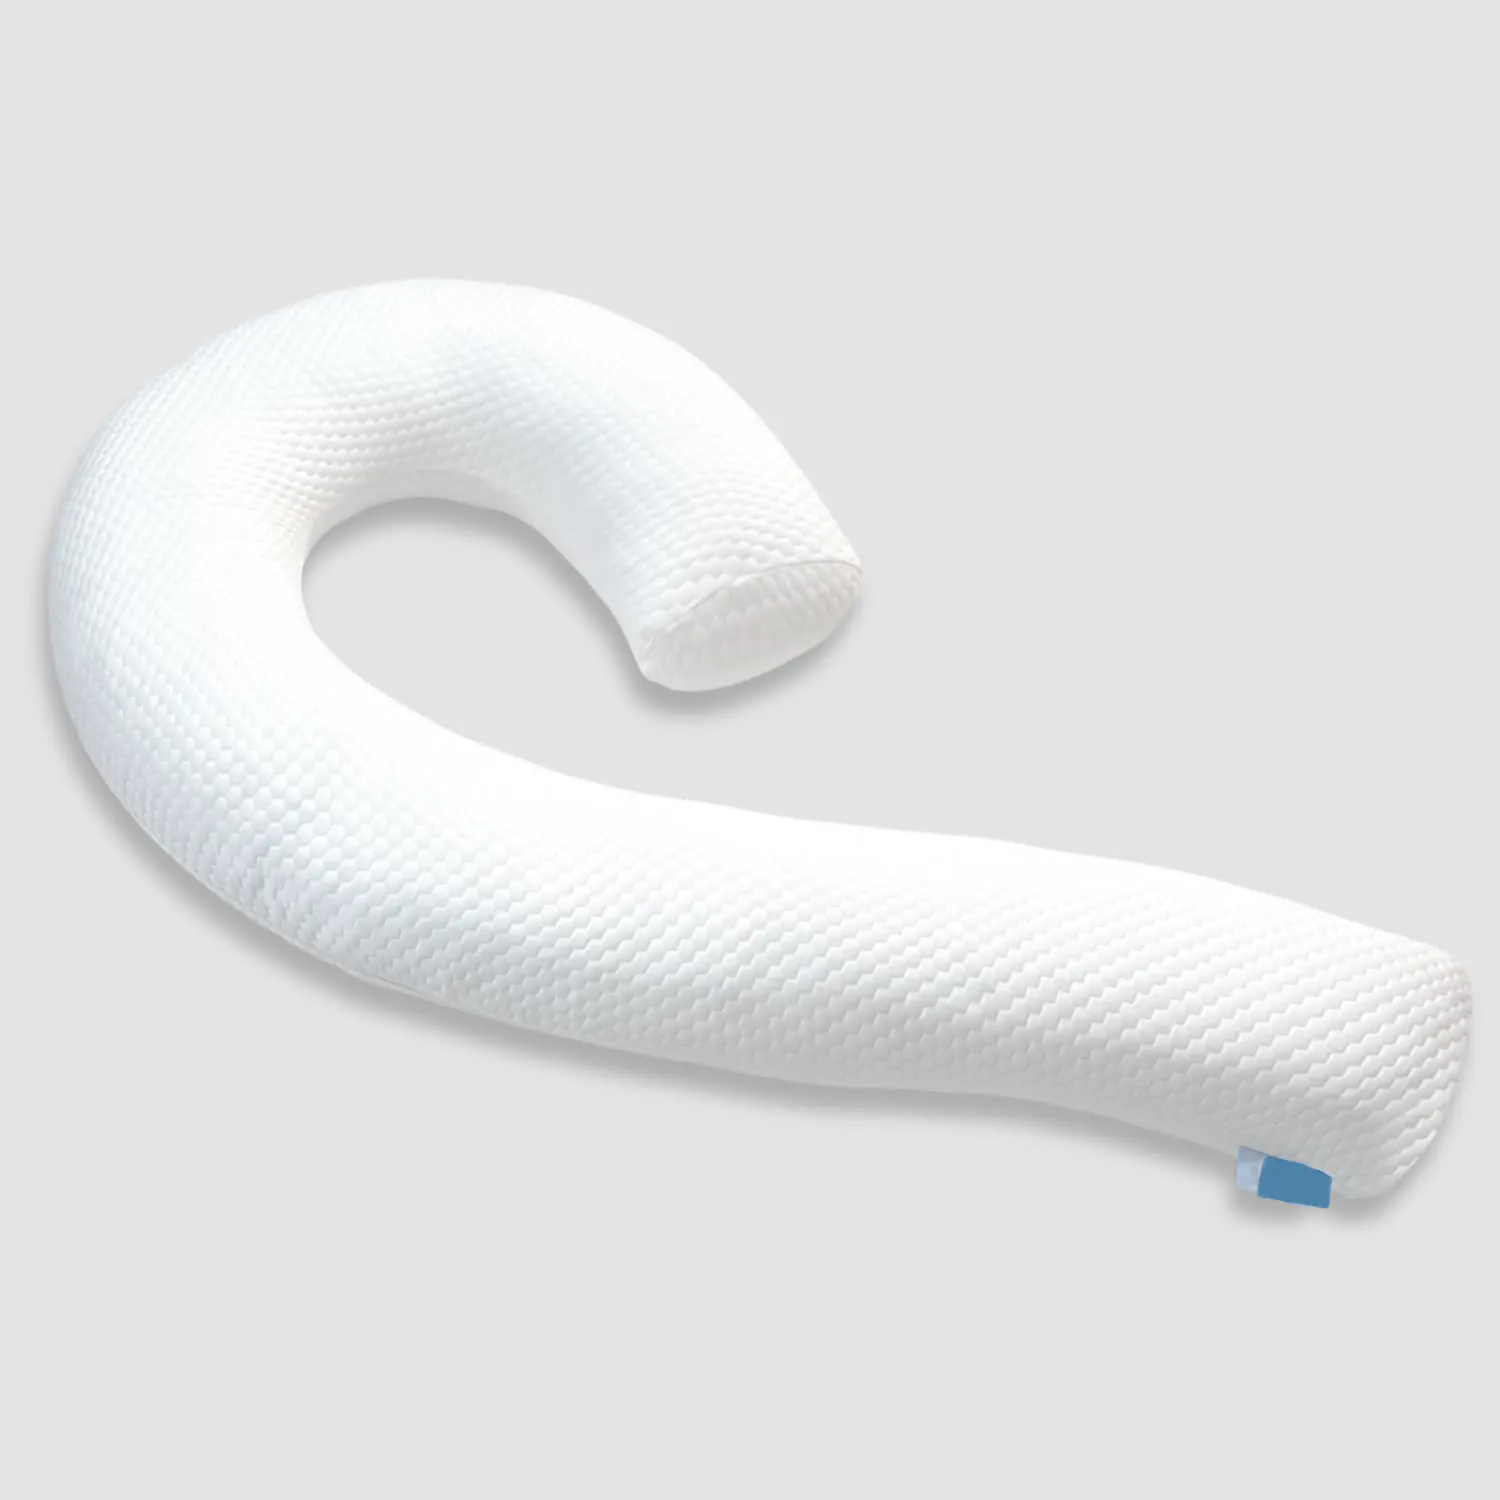 Summer Use Side Sleeper Swan Shaped Shredded Memory Foam Soft Long Bed Pillows Body Pillow for Pregnancy Side Sleeper